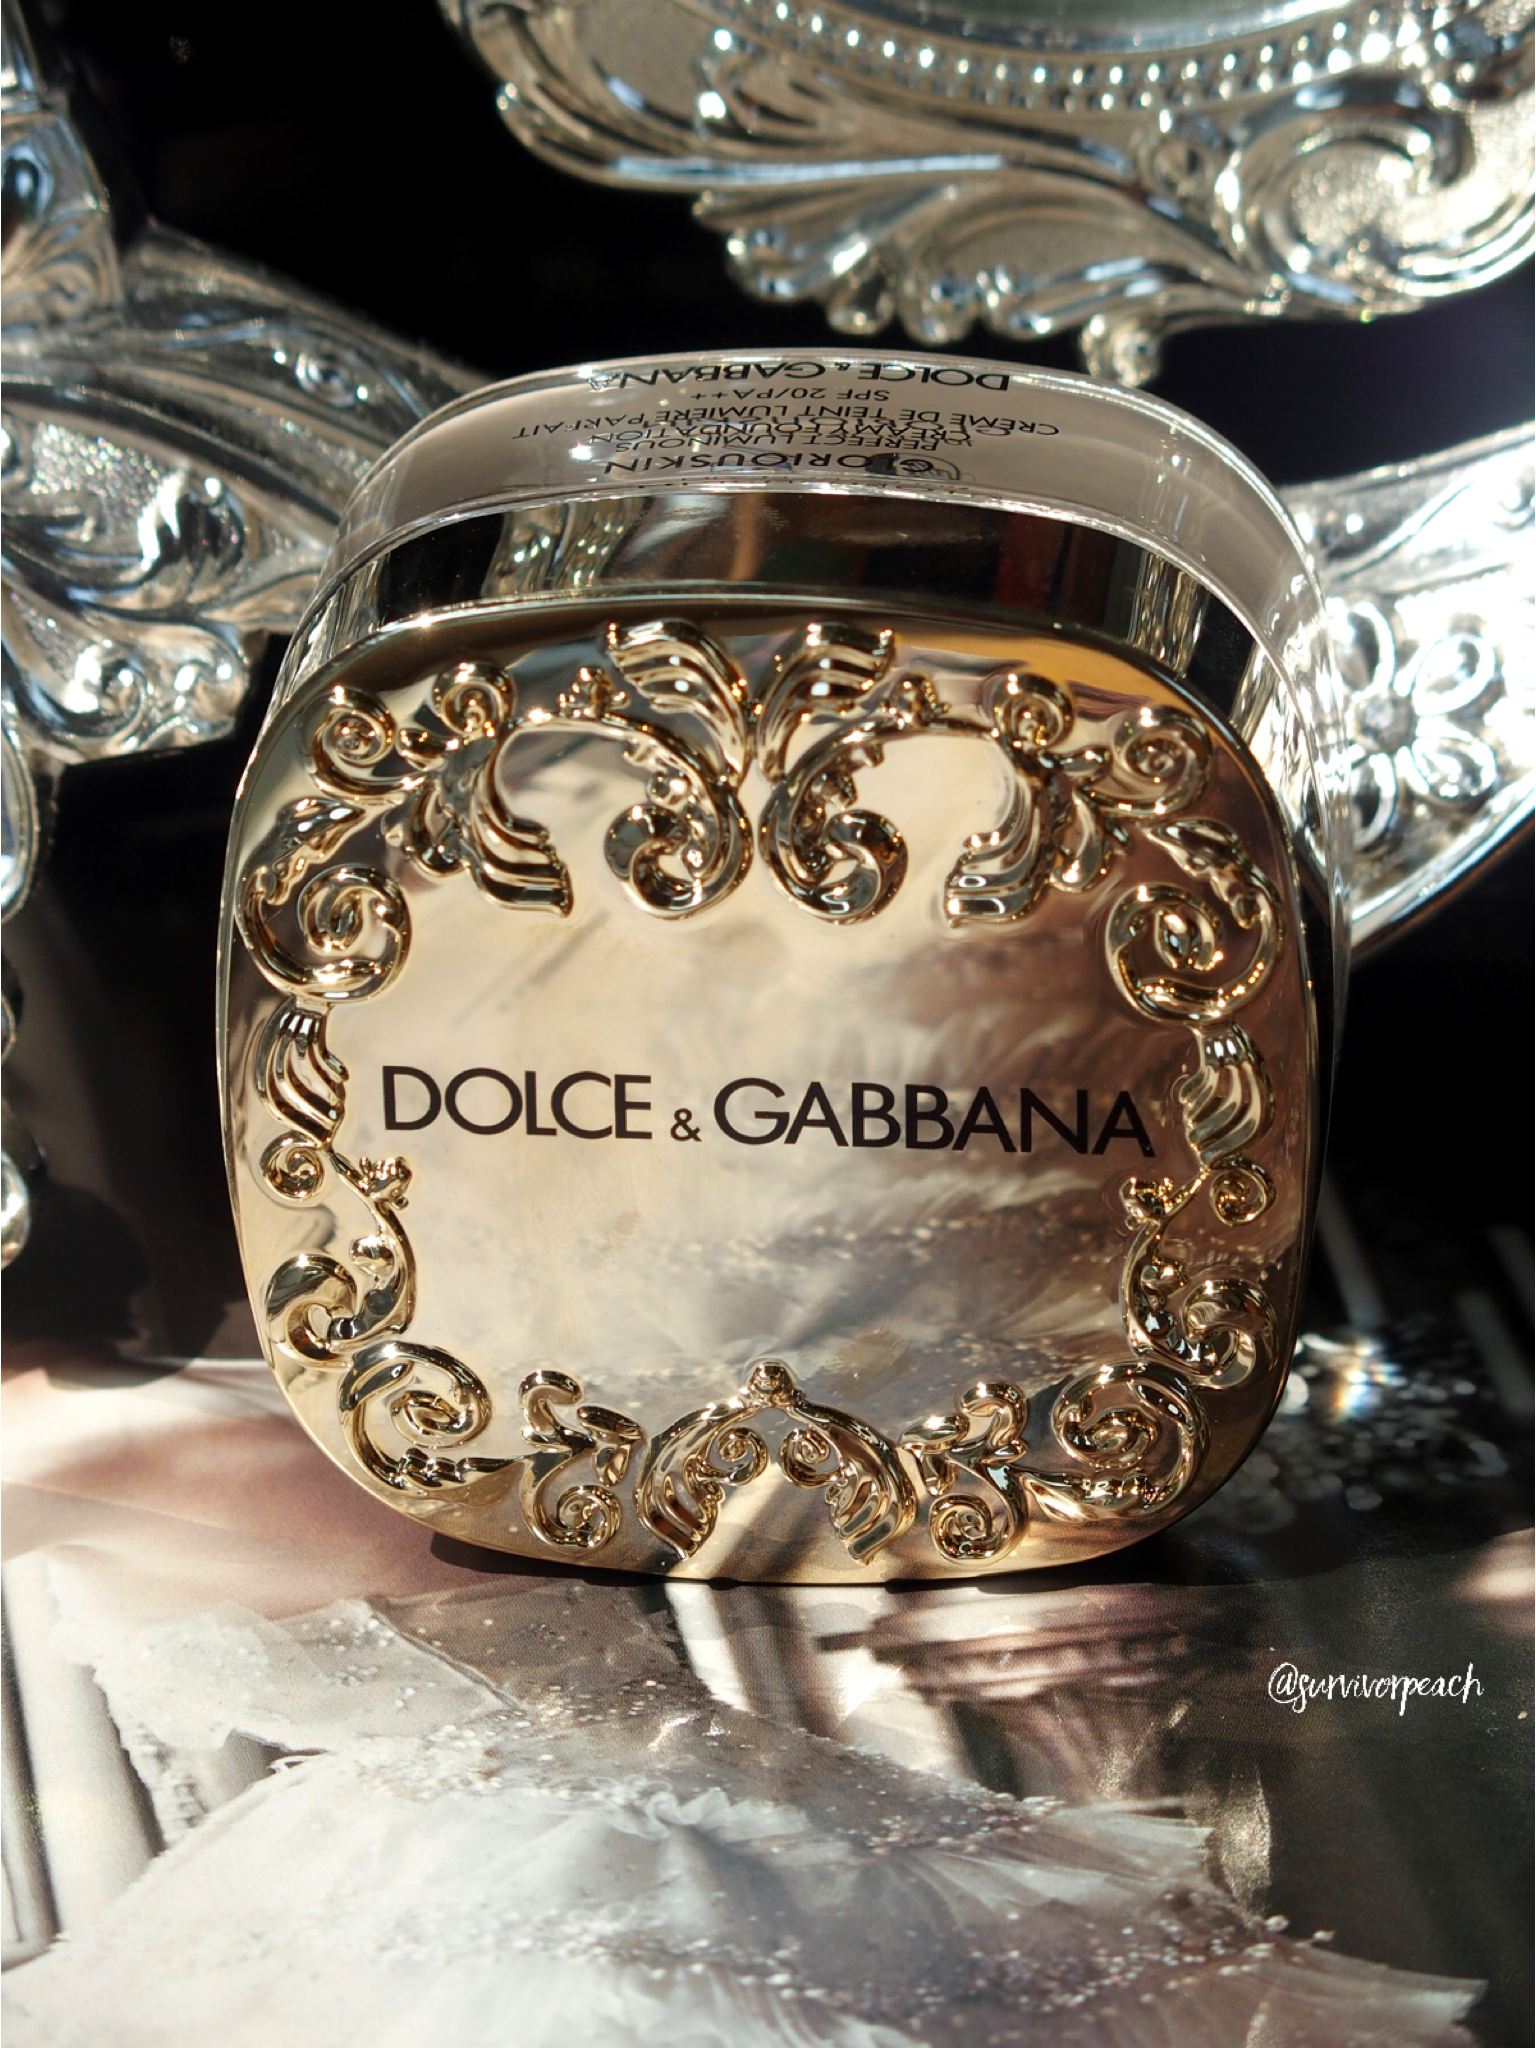 Дольче Габбана gloriouskin. Dolce Gabbana gloriouskin. Тональный крем Дольче Габбана. Dolce Gabbana gloriouskin 330 Almond.